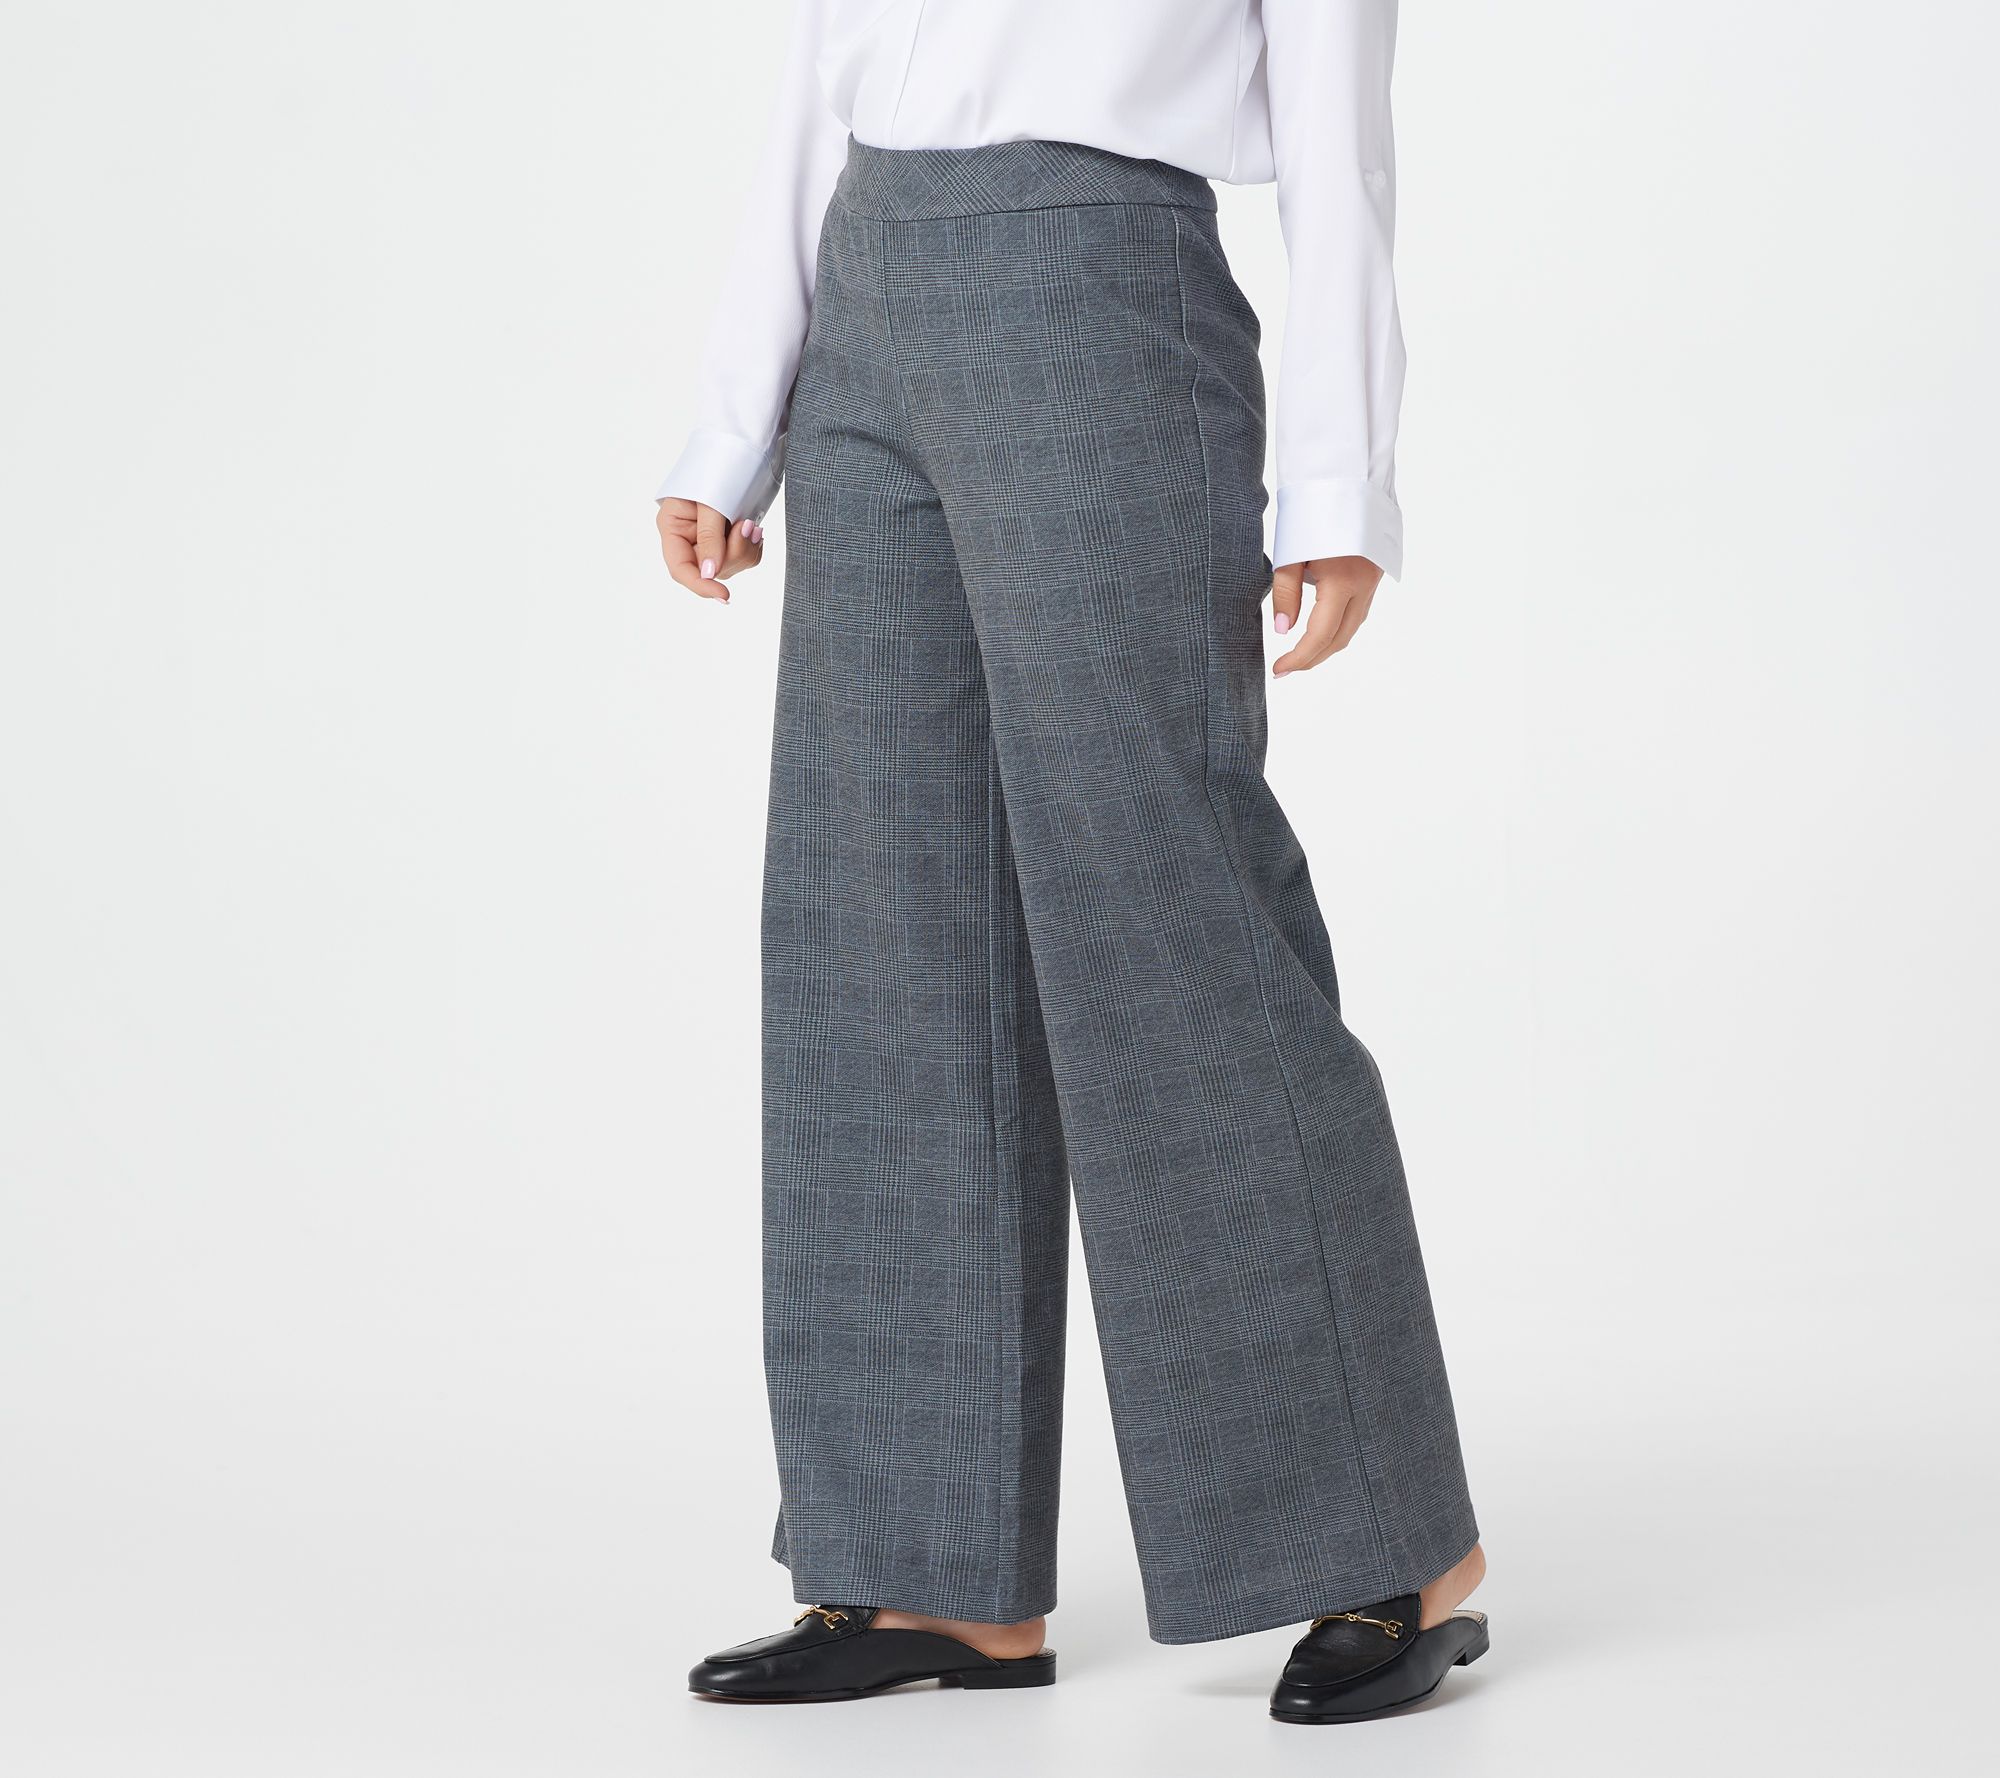 Joan Rivers Regular Plaid Pull-On Full Length Pants - A366438